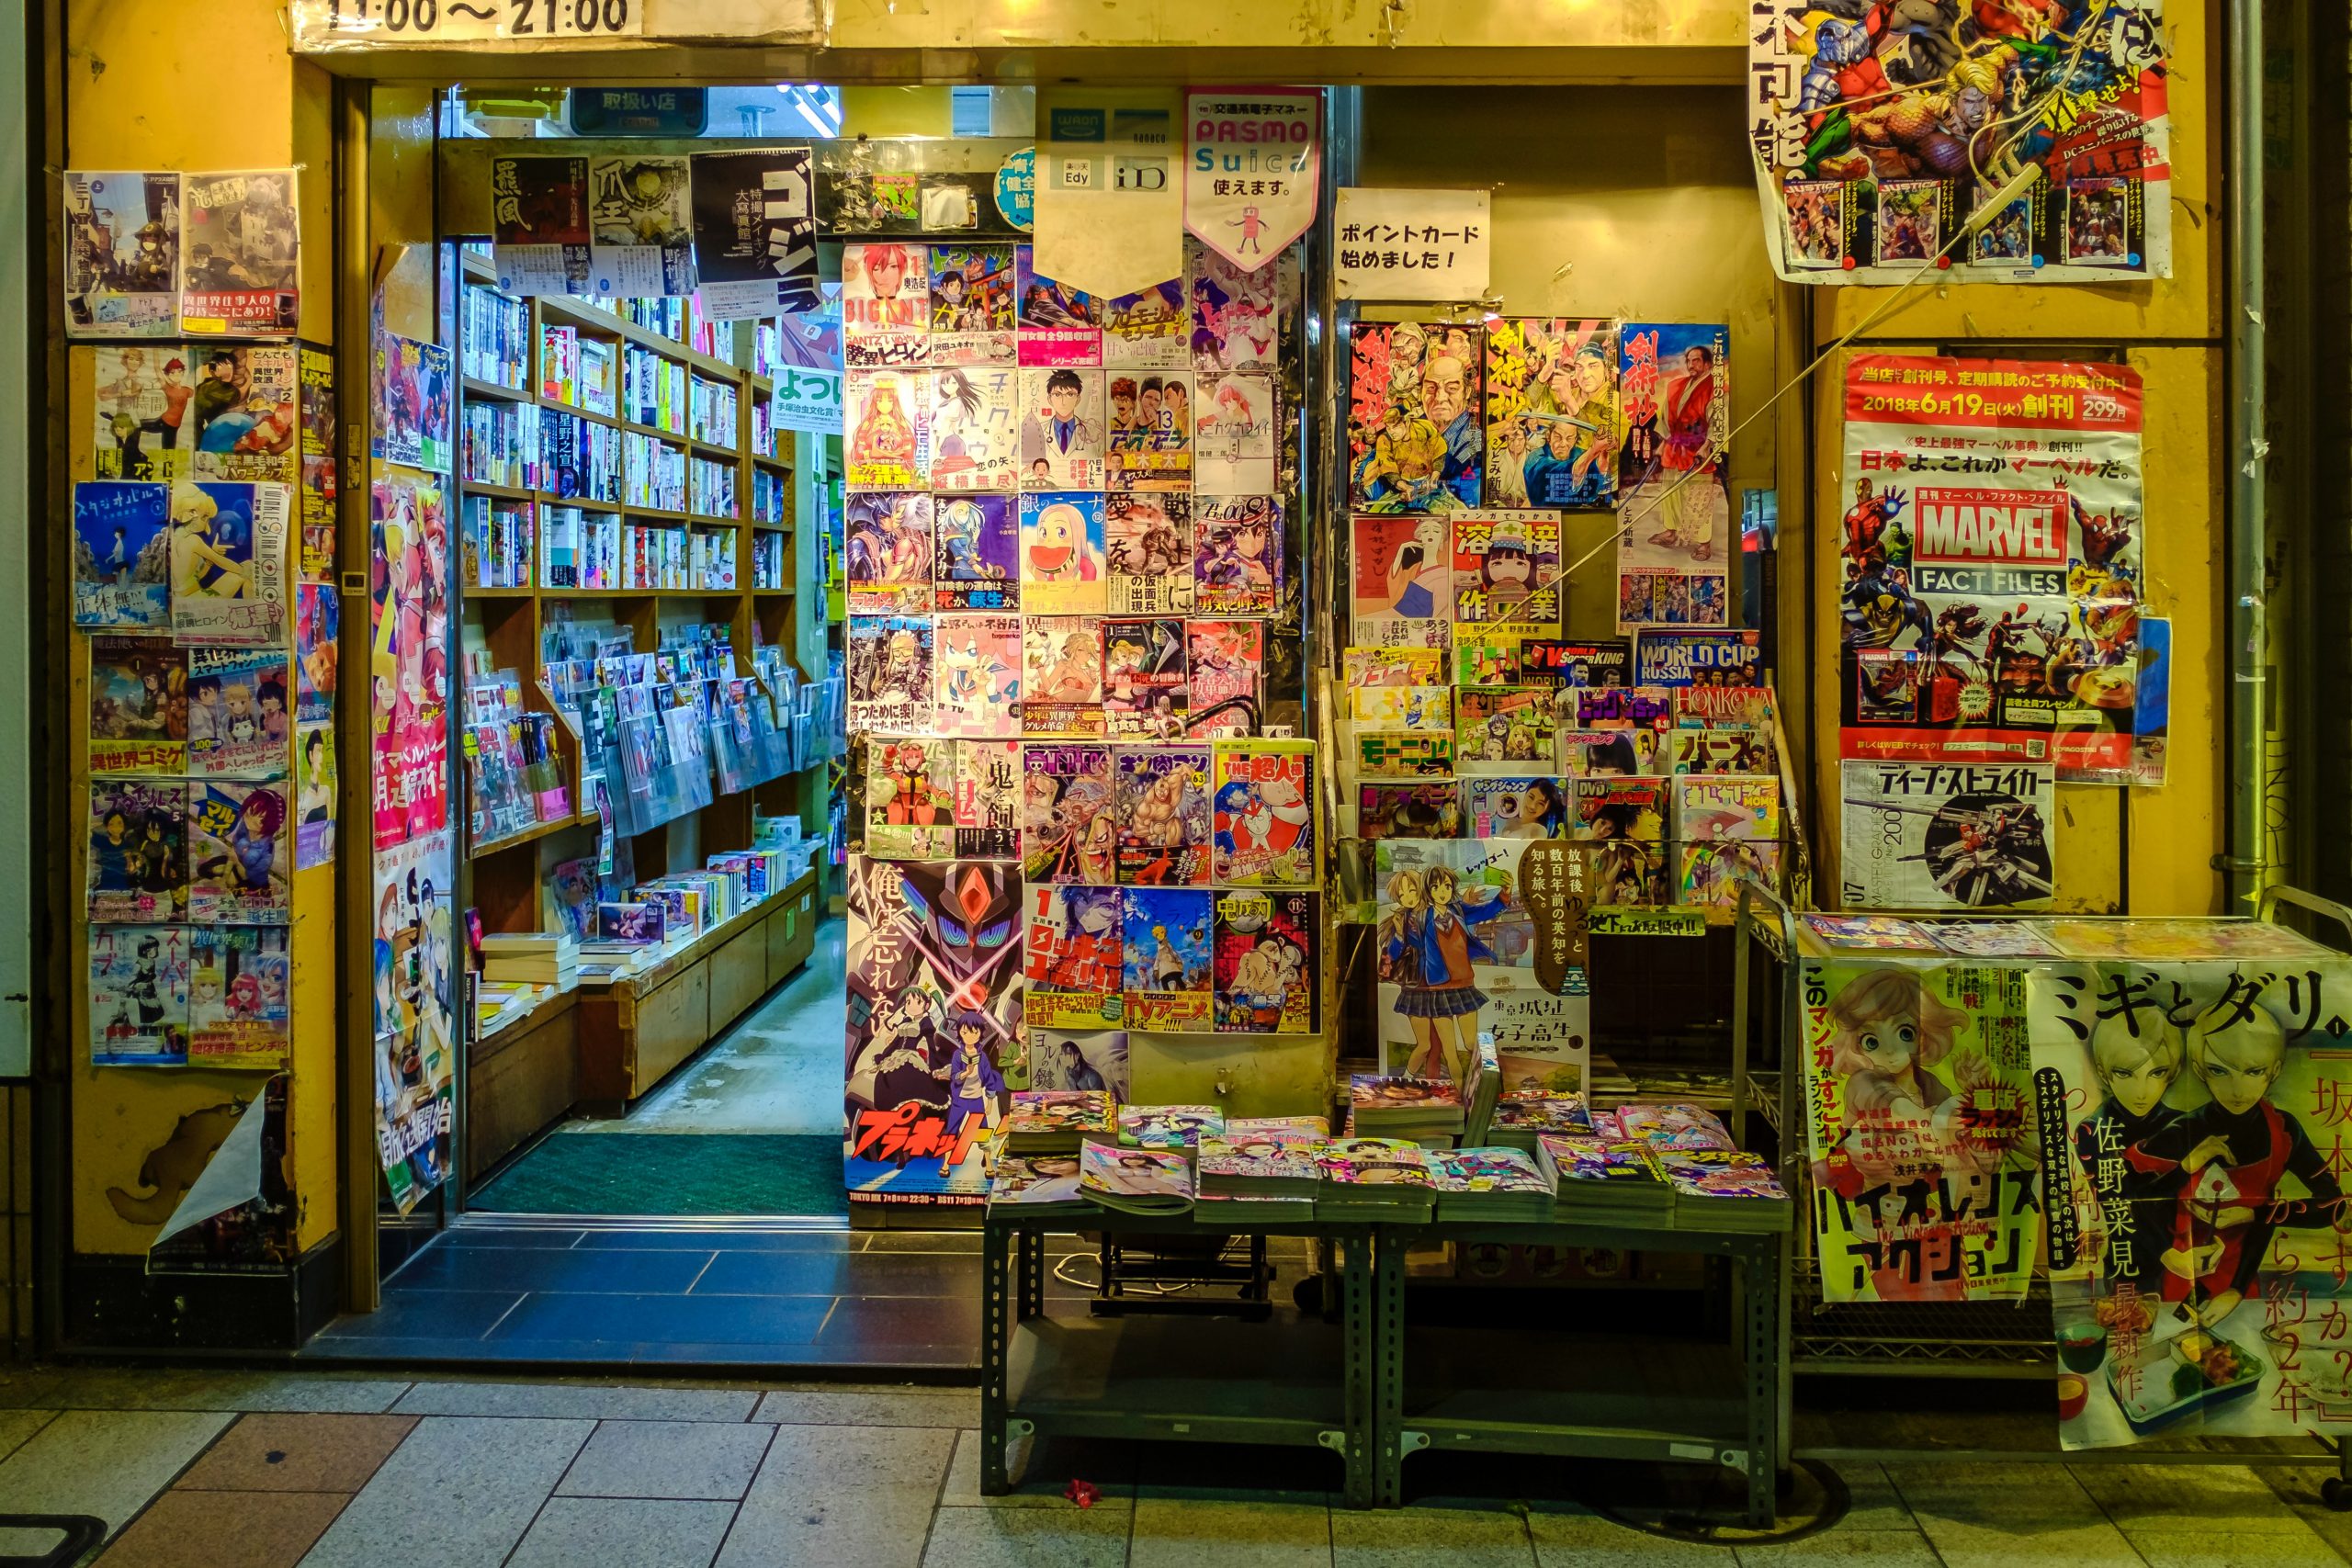 Entrance to a manga store in Shibuya